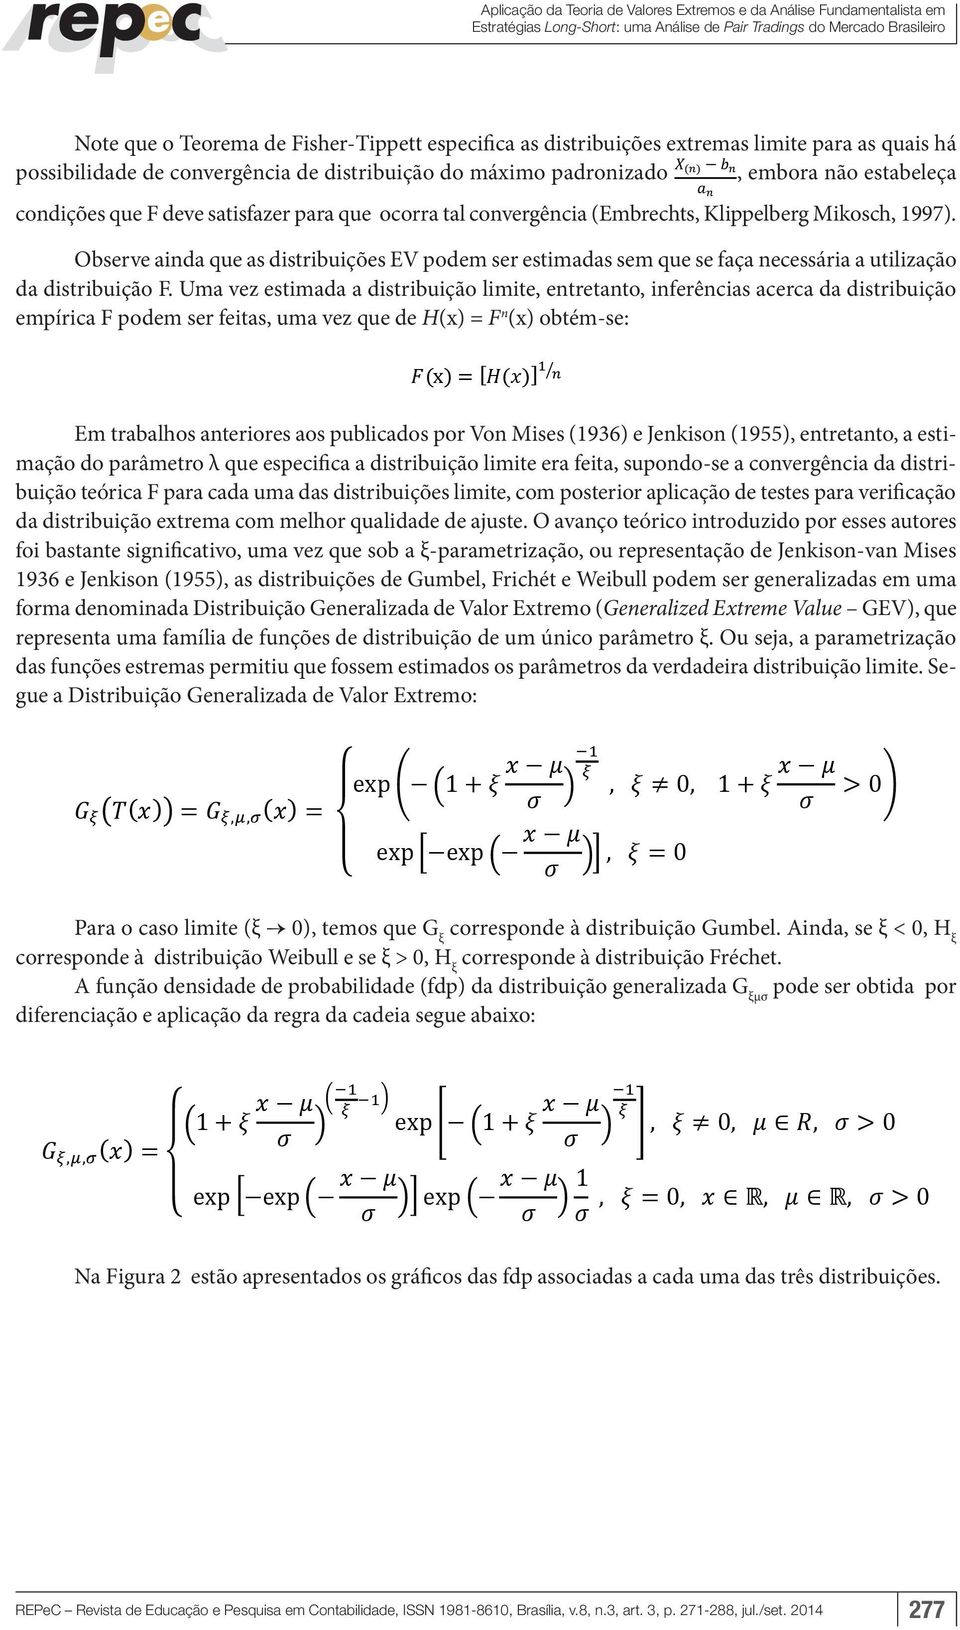 condições que F deve satisfazer para que ocorra tal convergência (Embrechts, Klippelberg Mikosch, 1997).